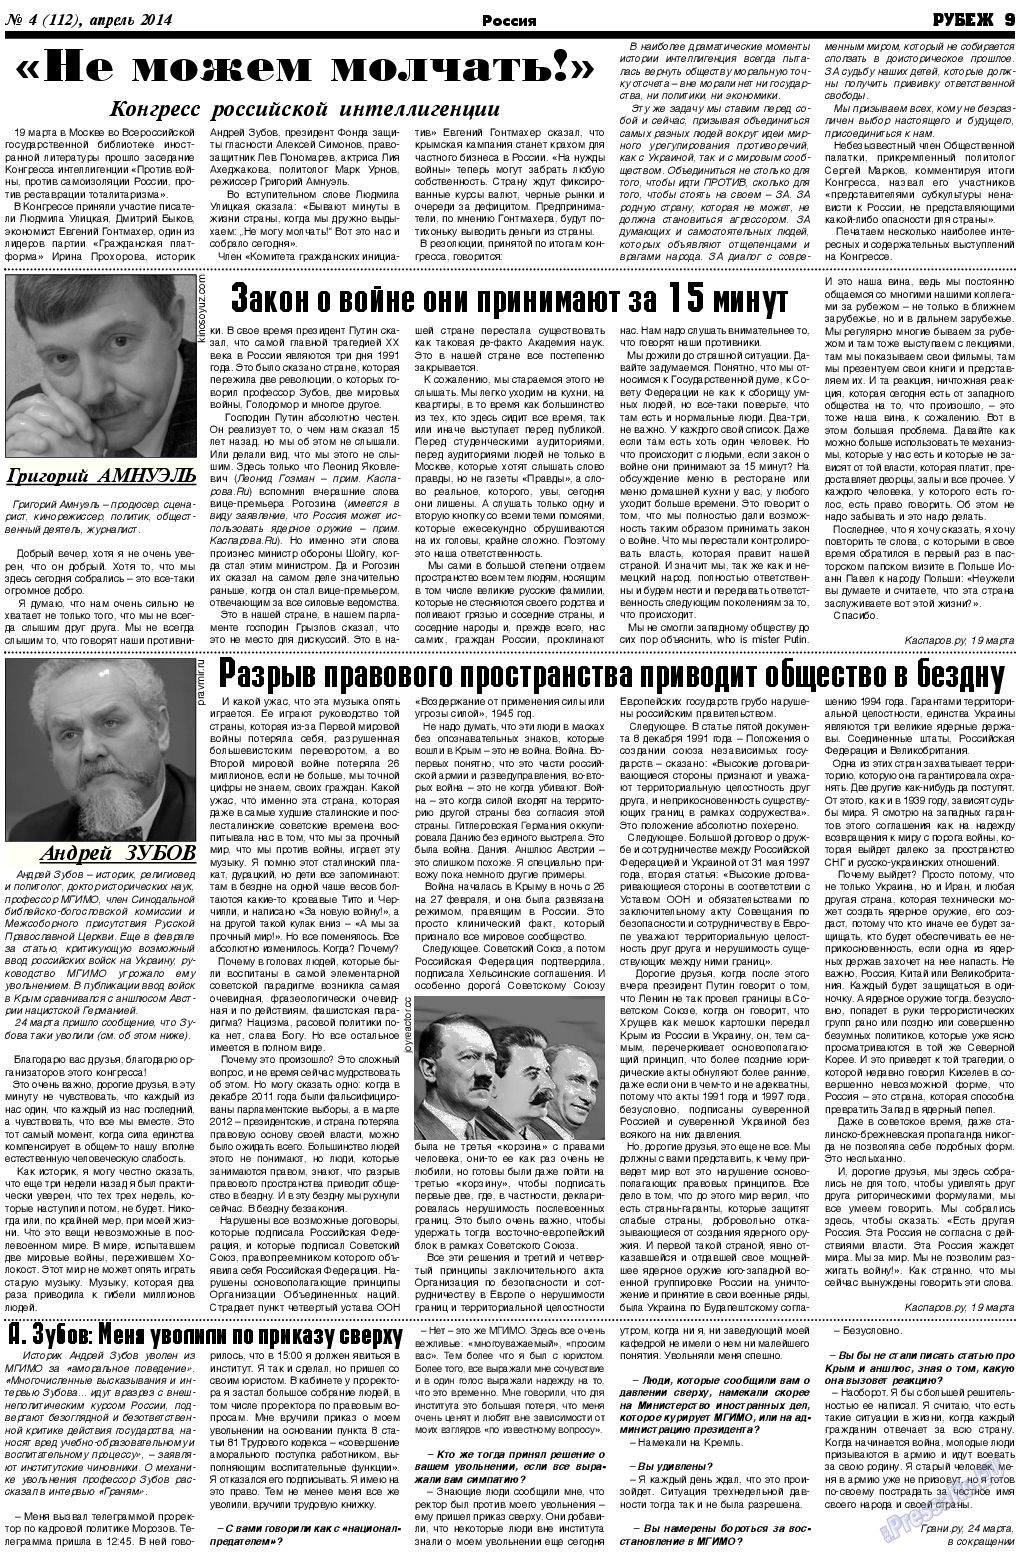 Рубеж, газета. 2014 №4 стр.9